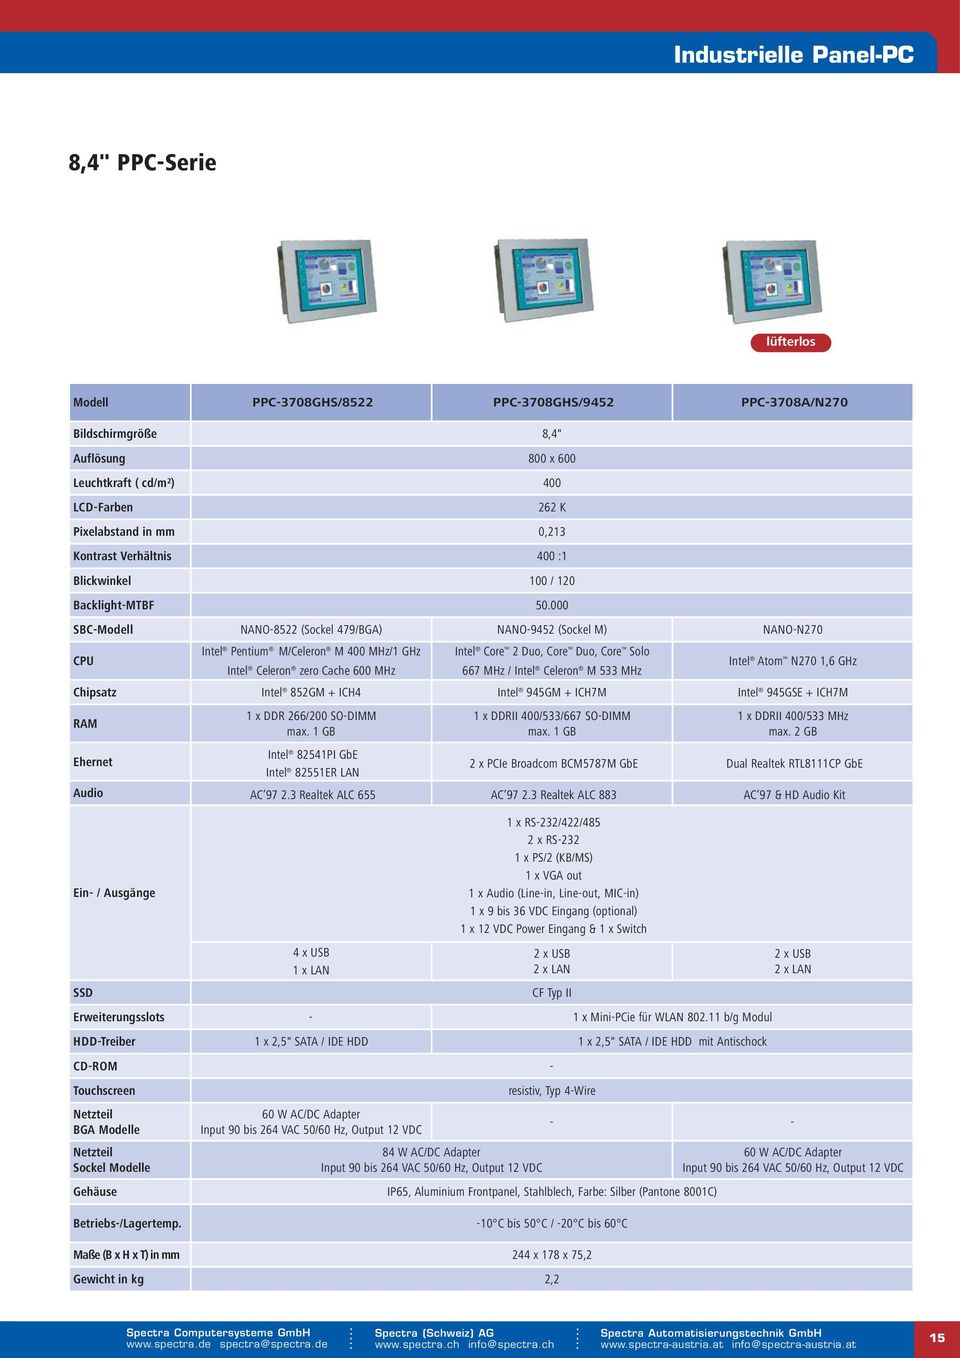 000 SBC-Modell NANO-8522 (Sockel 479/BGA) NANO-9452 (Sockel M) NANO-N270 CPU Intel Pentium M/Celeron M 400 MHz/1 GHz Intel Core 2 Duo, Core Duo, Core Solo Intel Atom N270 1,6 GHz Intel Celeron zero